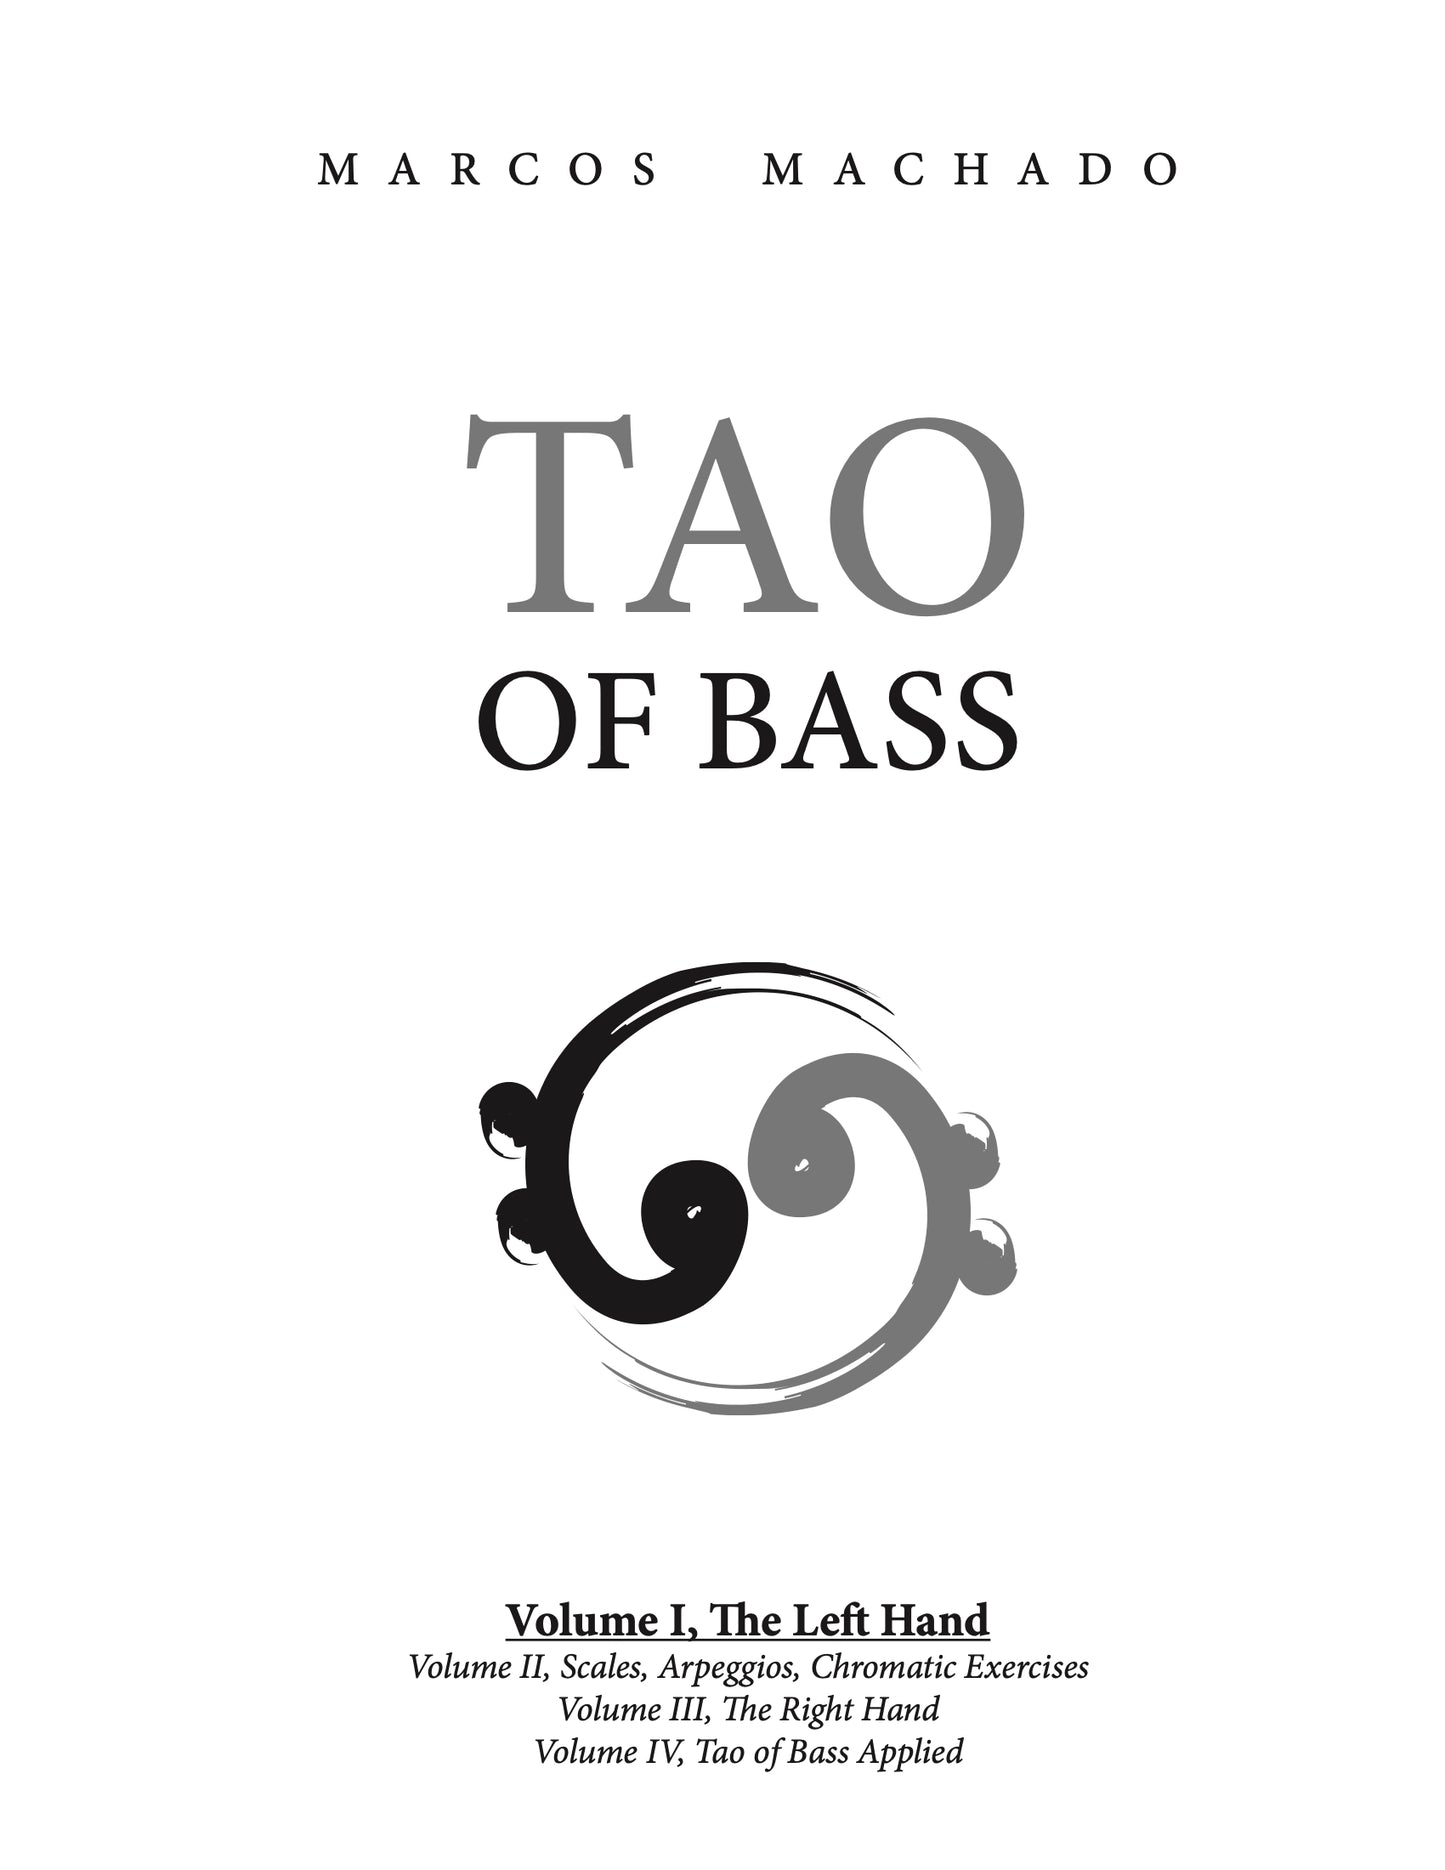 Marcos Machado: Tao of Bass, Volume I, The Left Hand